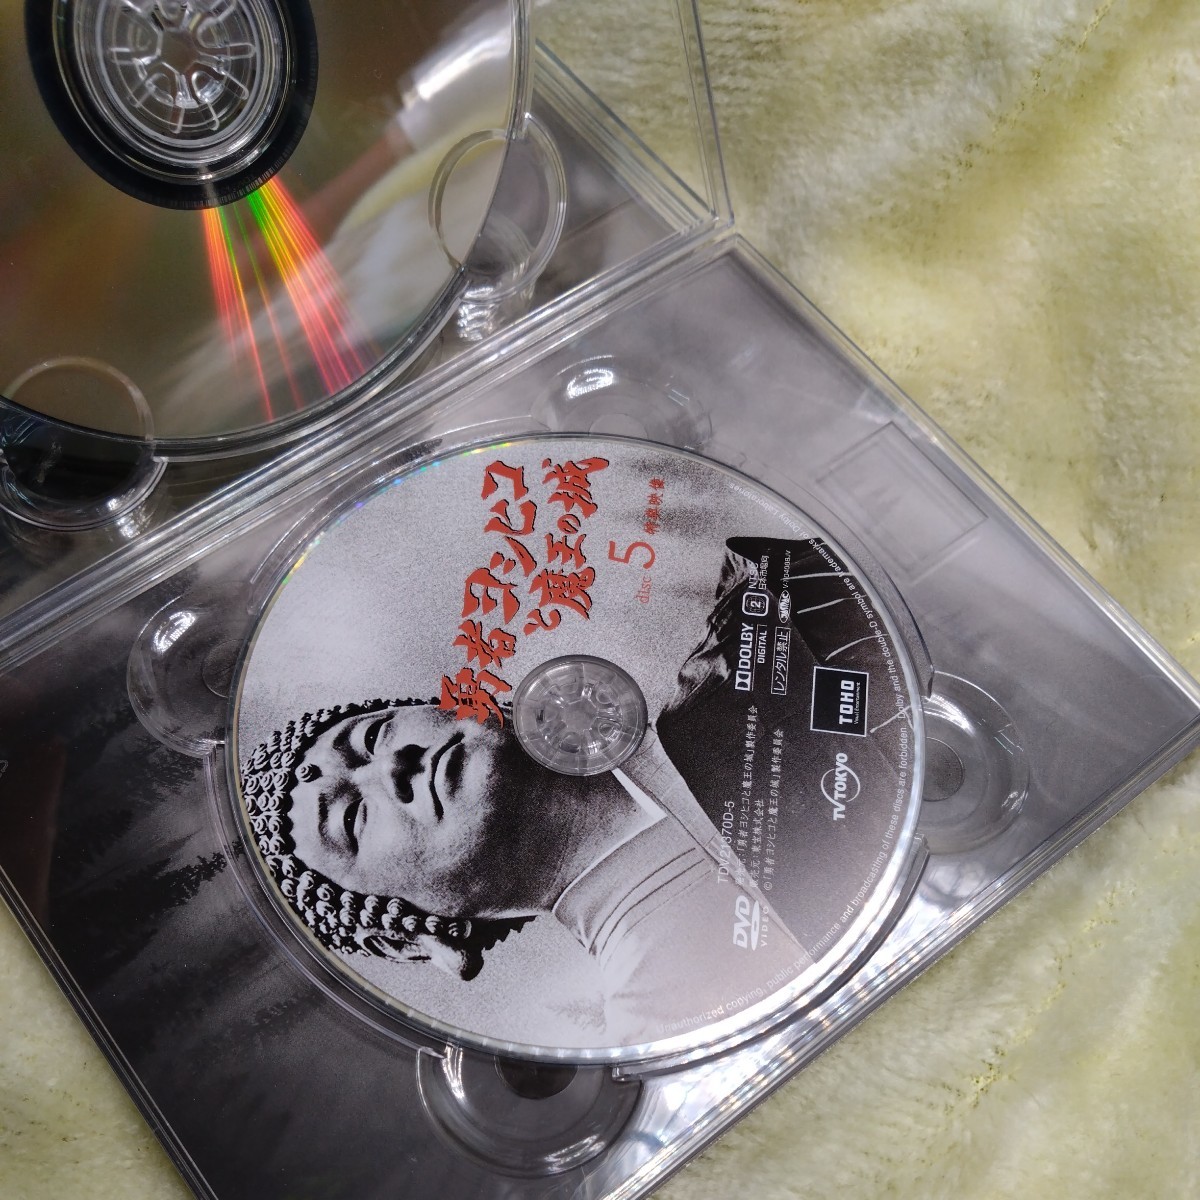 DVD 勇者ヨシヒコと魔王の城 DVD-BOX